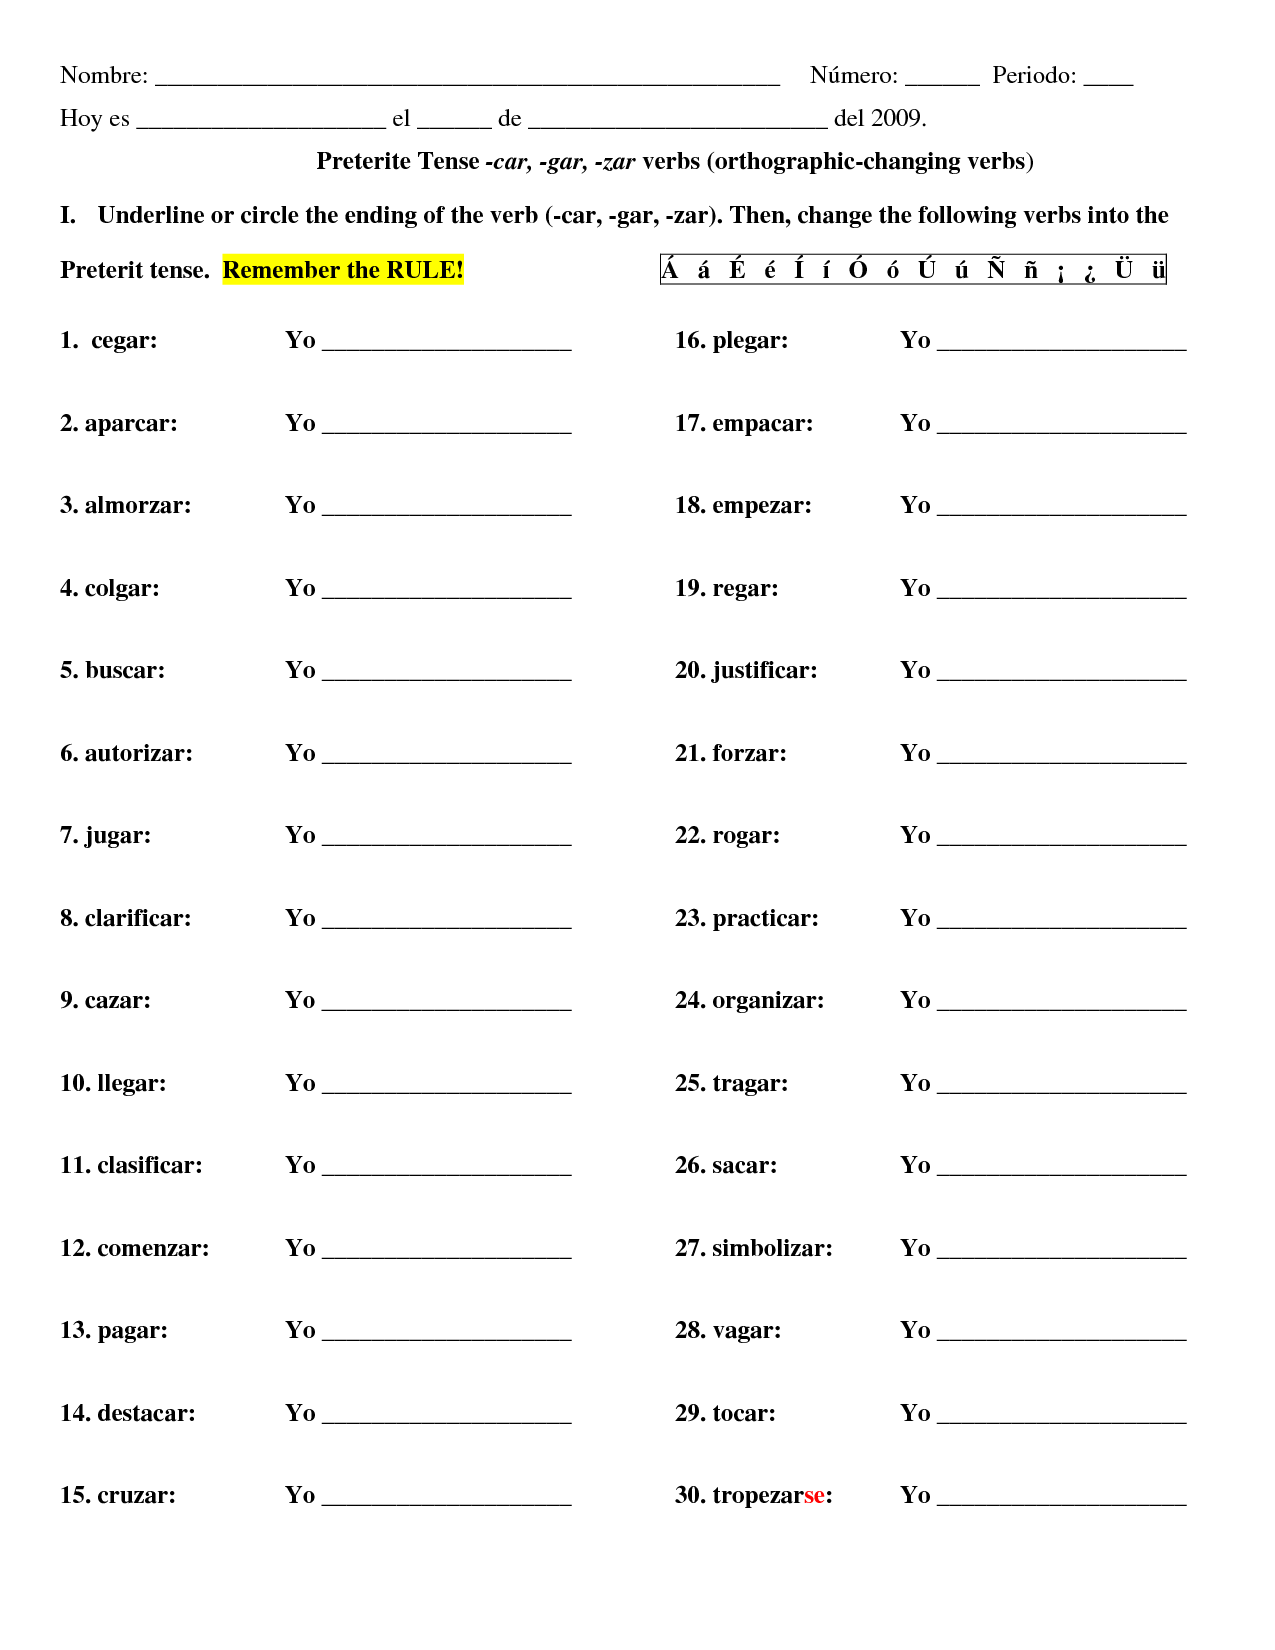 18-best-images-of-preterite-tense-worksheets-spanish-preterite-tense-practice-worksheet-car